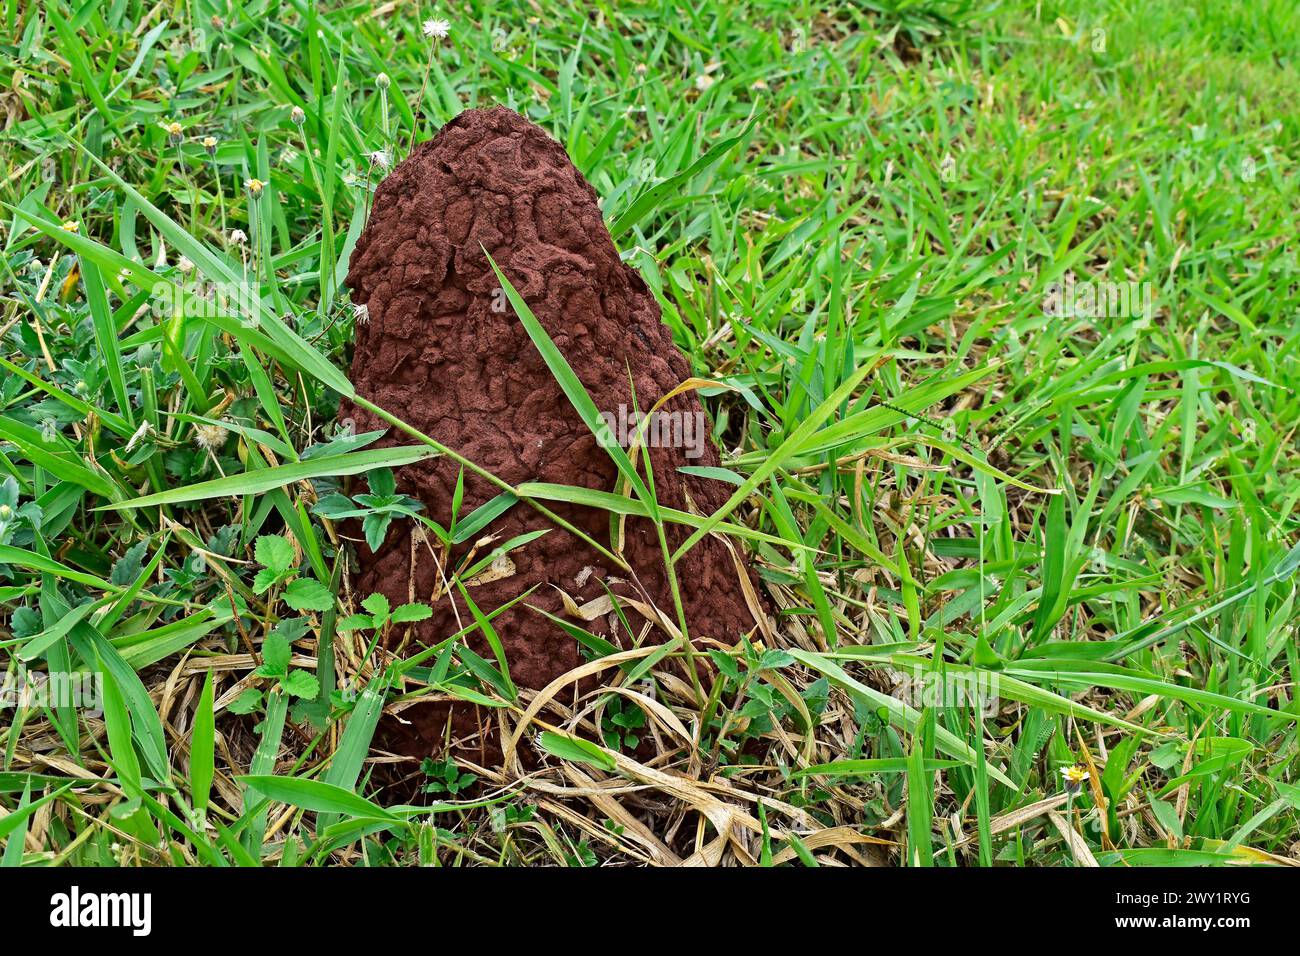 Termite mound on grass, Ribeirao Preto, Sao Paulo, Brazil Stock Photo